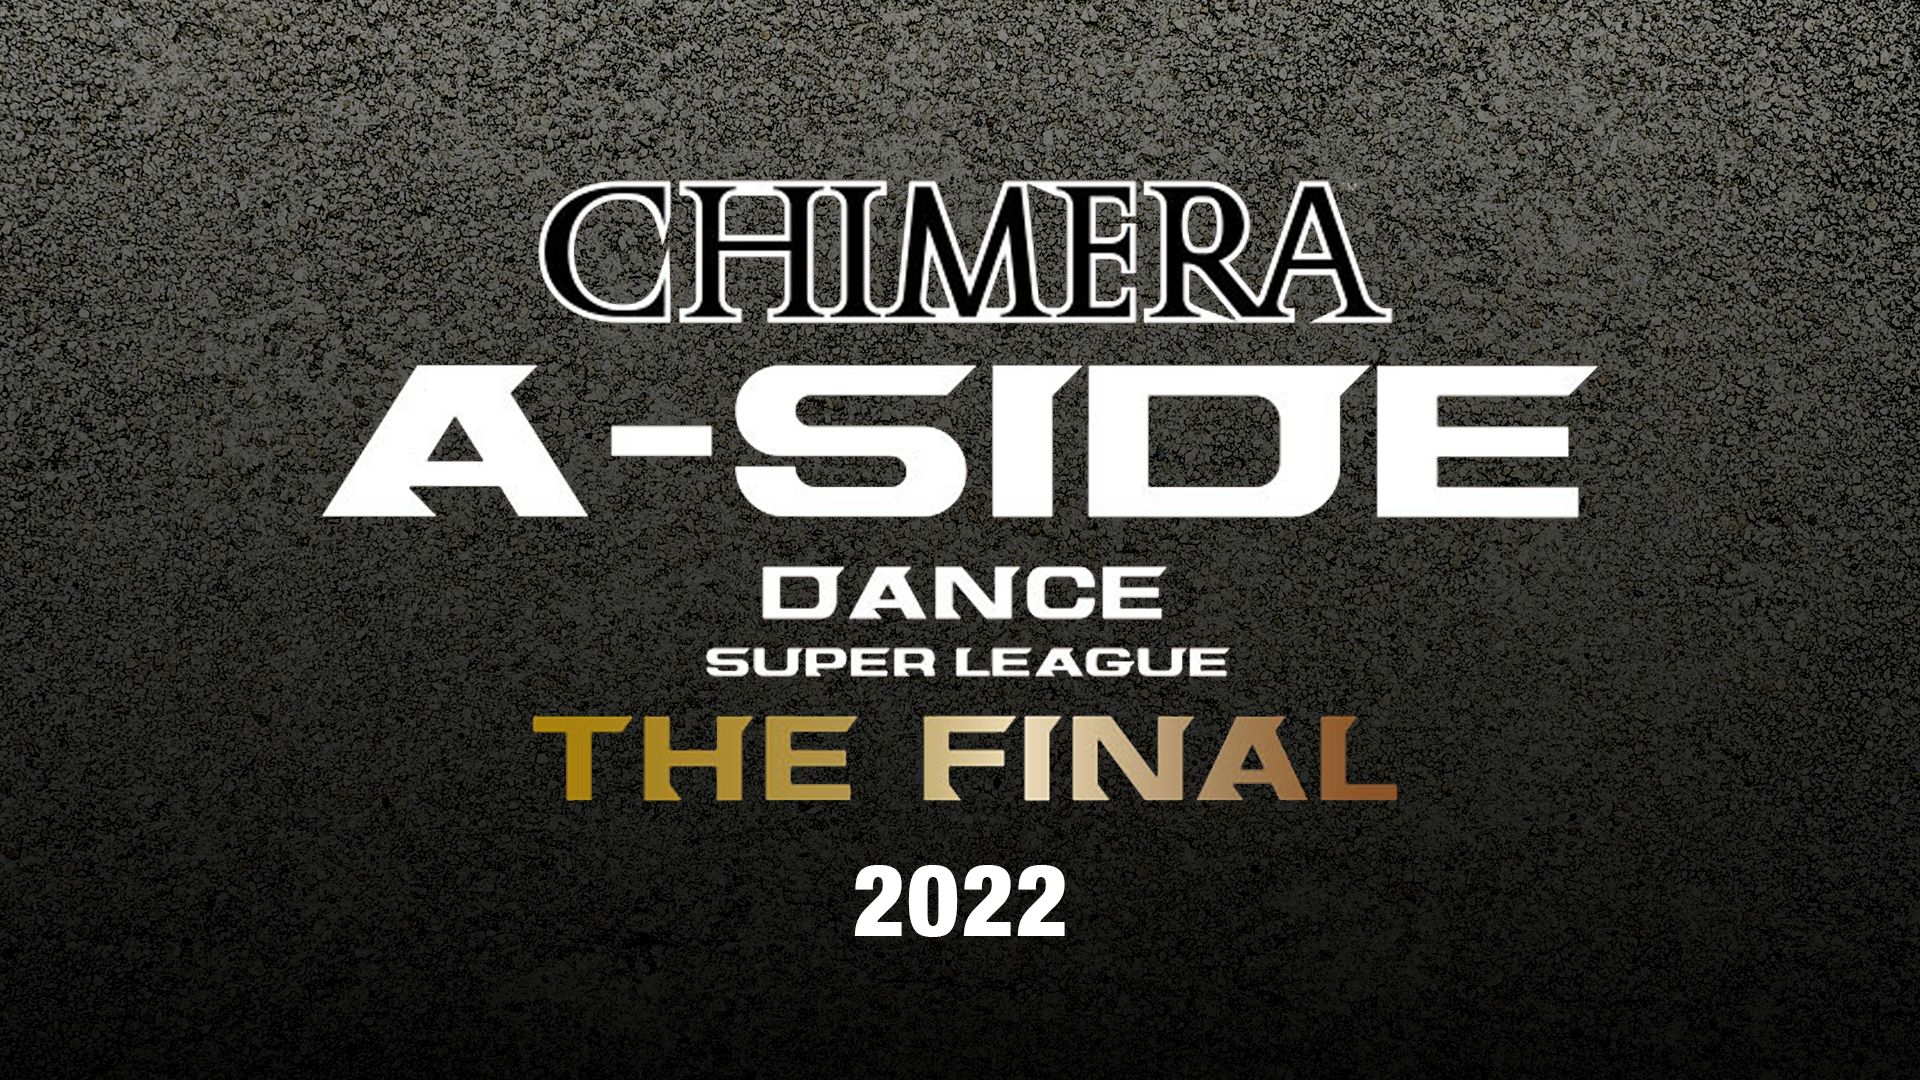 CHIMERA A-SIDE DANCE SUPER LEAGUE “THE FINAL” 2022